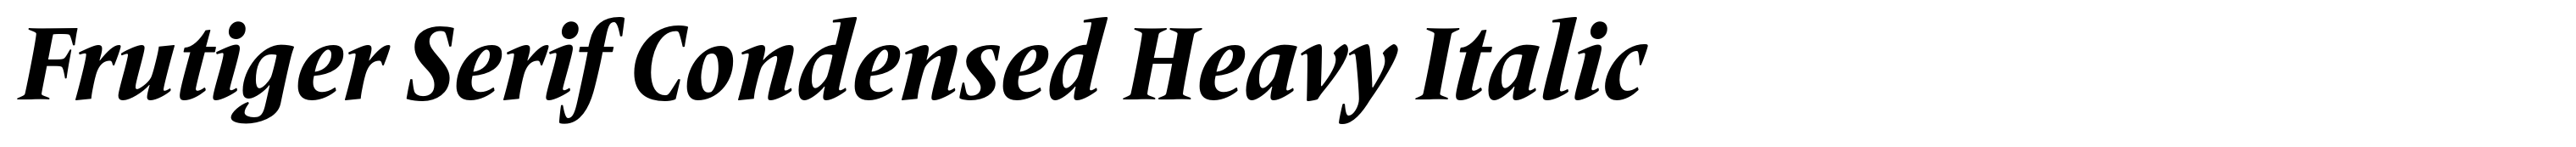 Frutiger Serif Condensed Heavy Italic